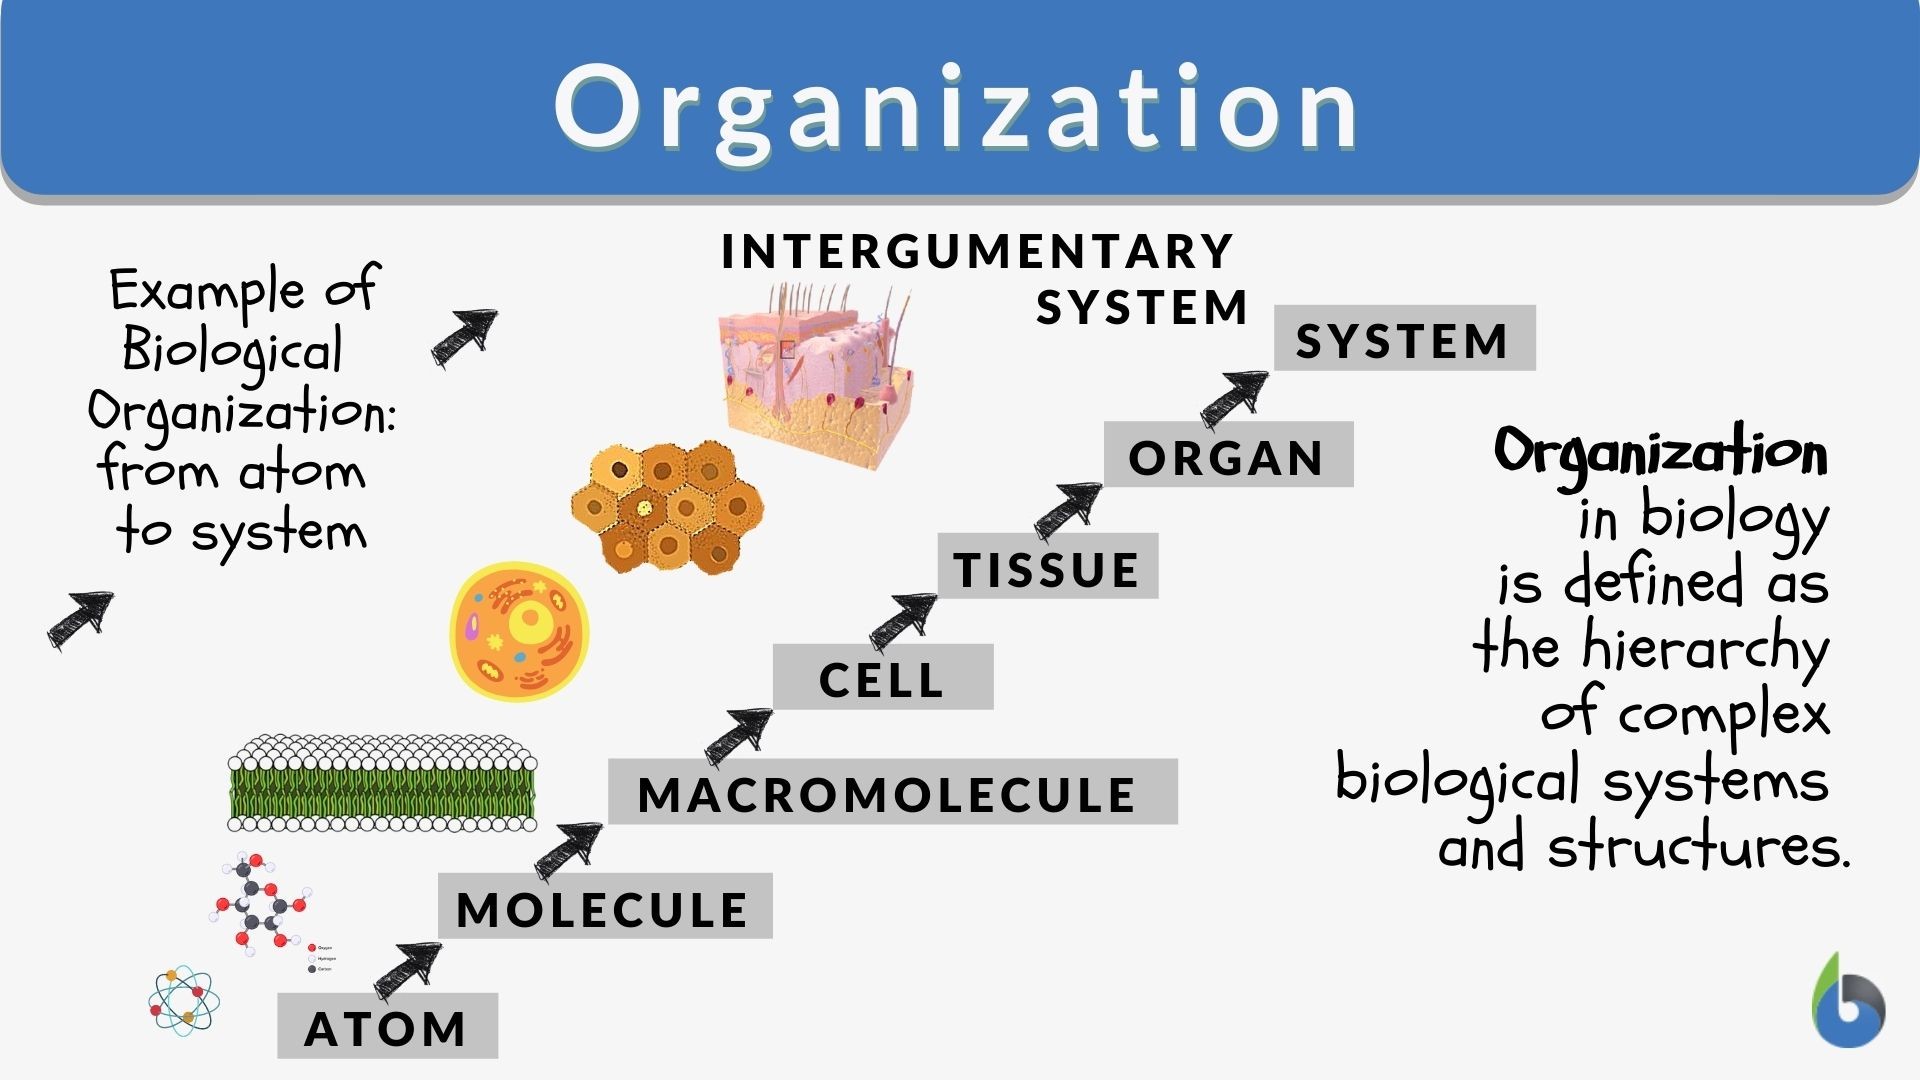 https://www.biologyonline.com/wp-content/uploads/2019/10/organization-in-biology-definition-and-example.jpg